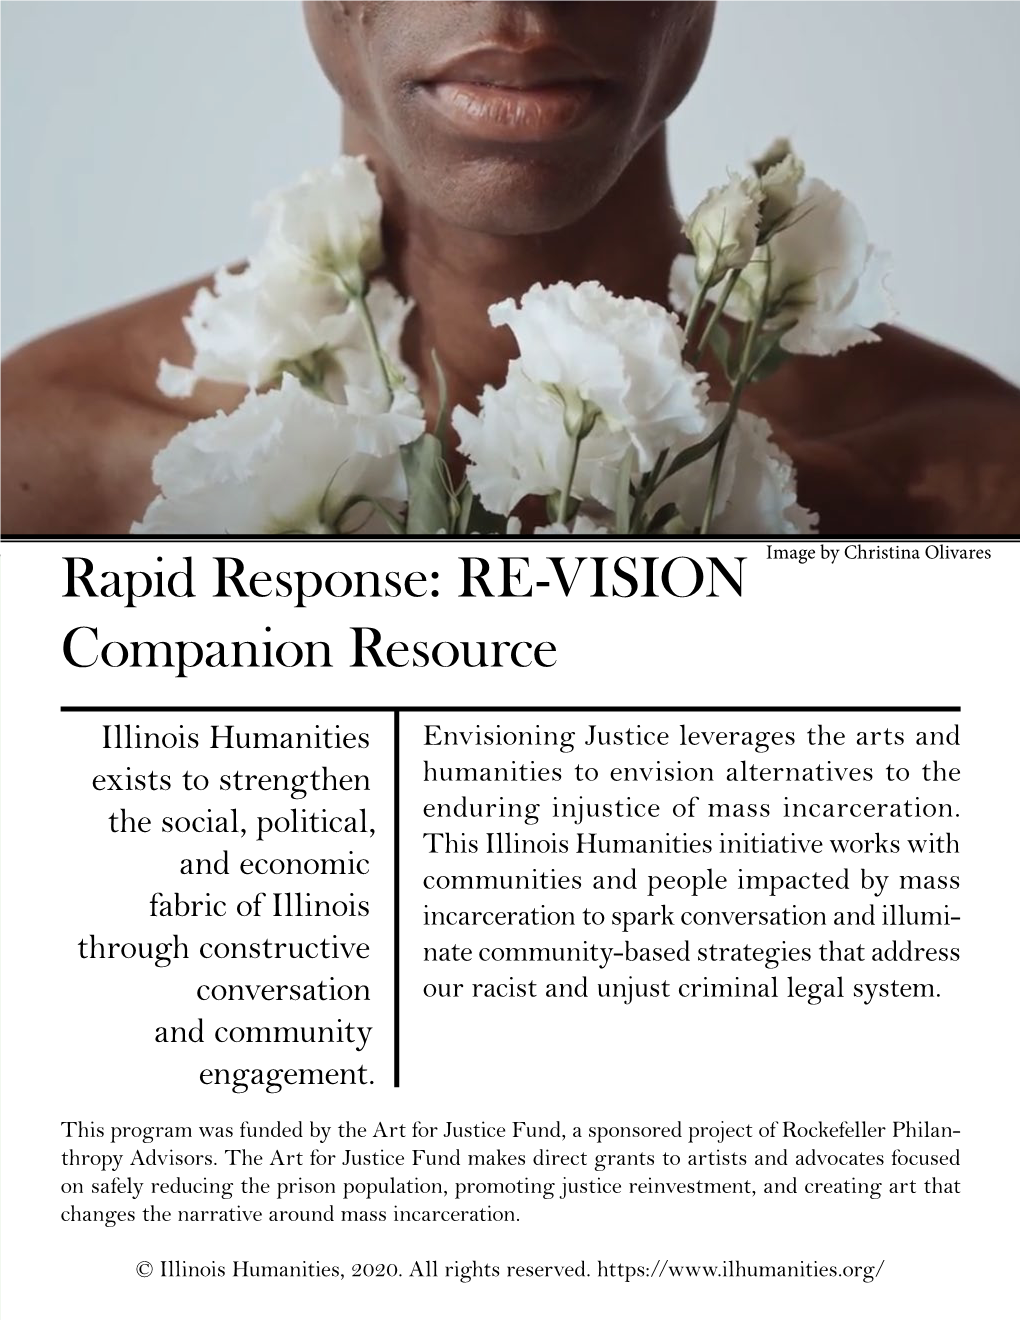 Rapid Response: RE-VISION Companion Guide